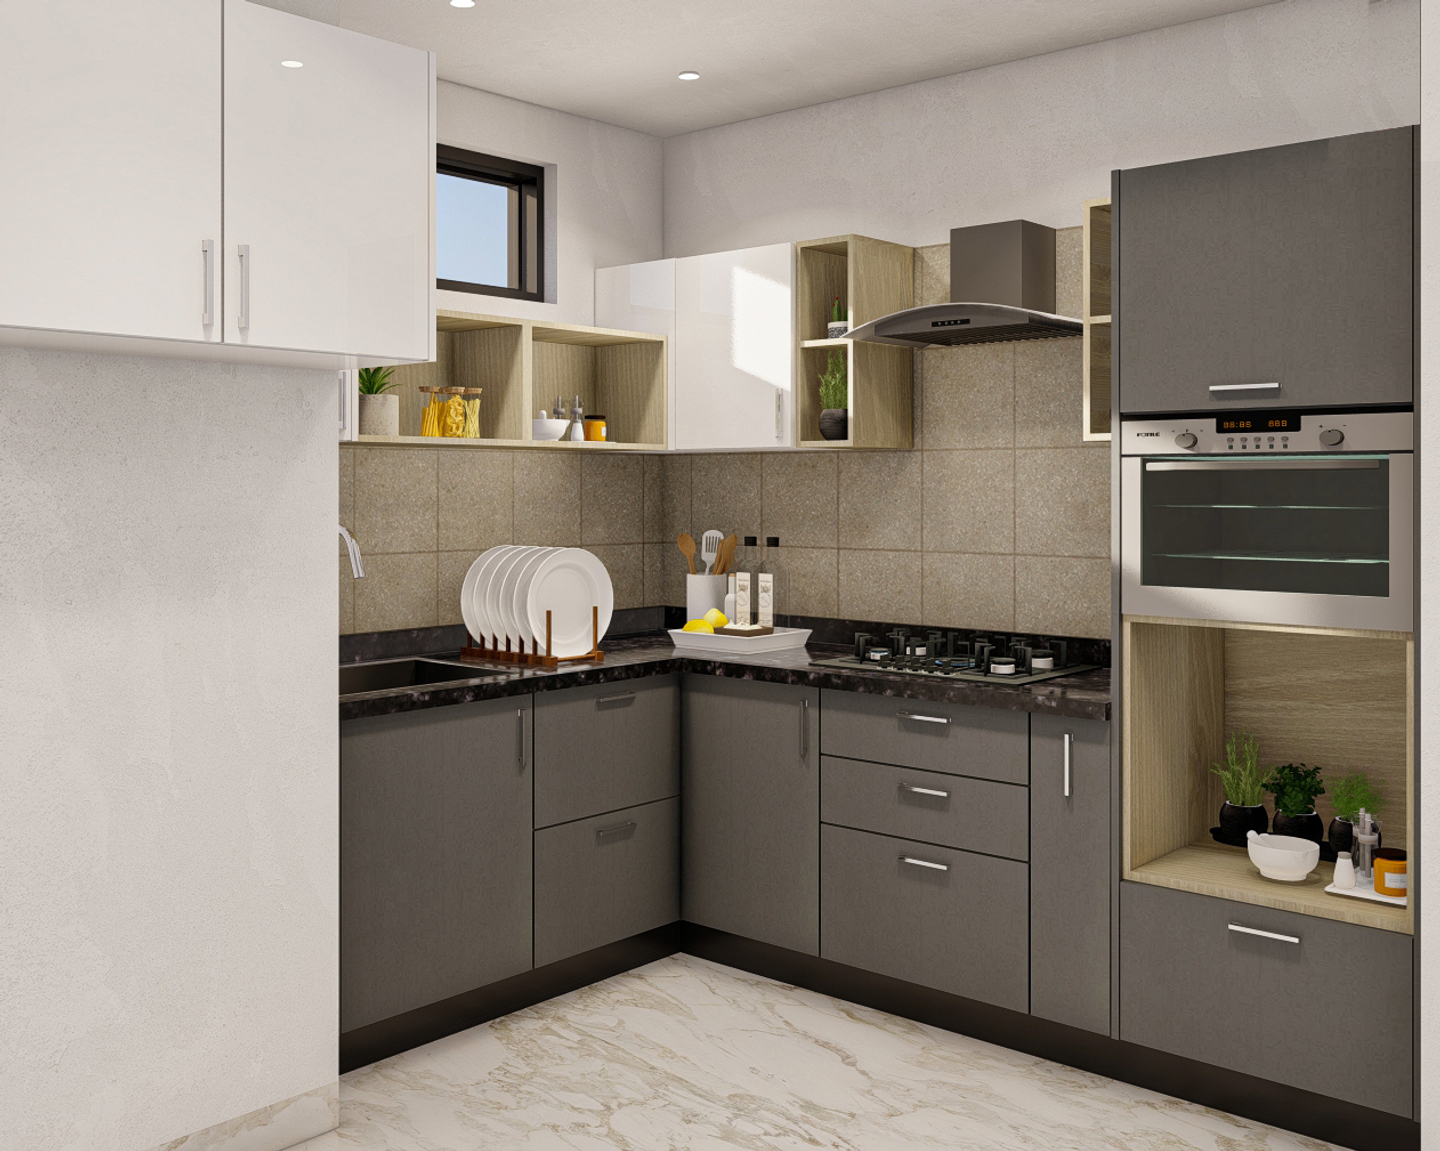 Easy To Maintain Modern Kitchen Design - Livspace